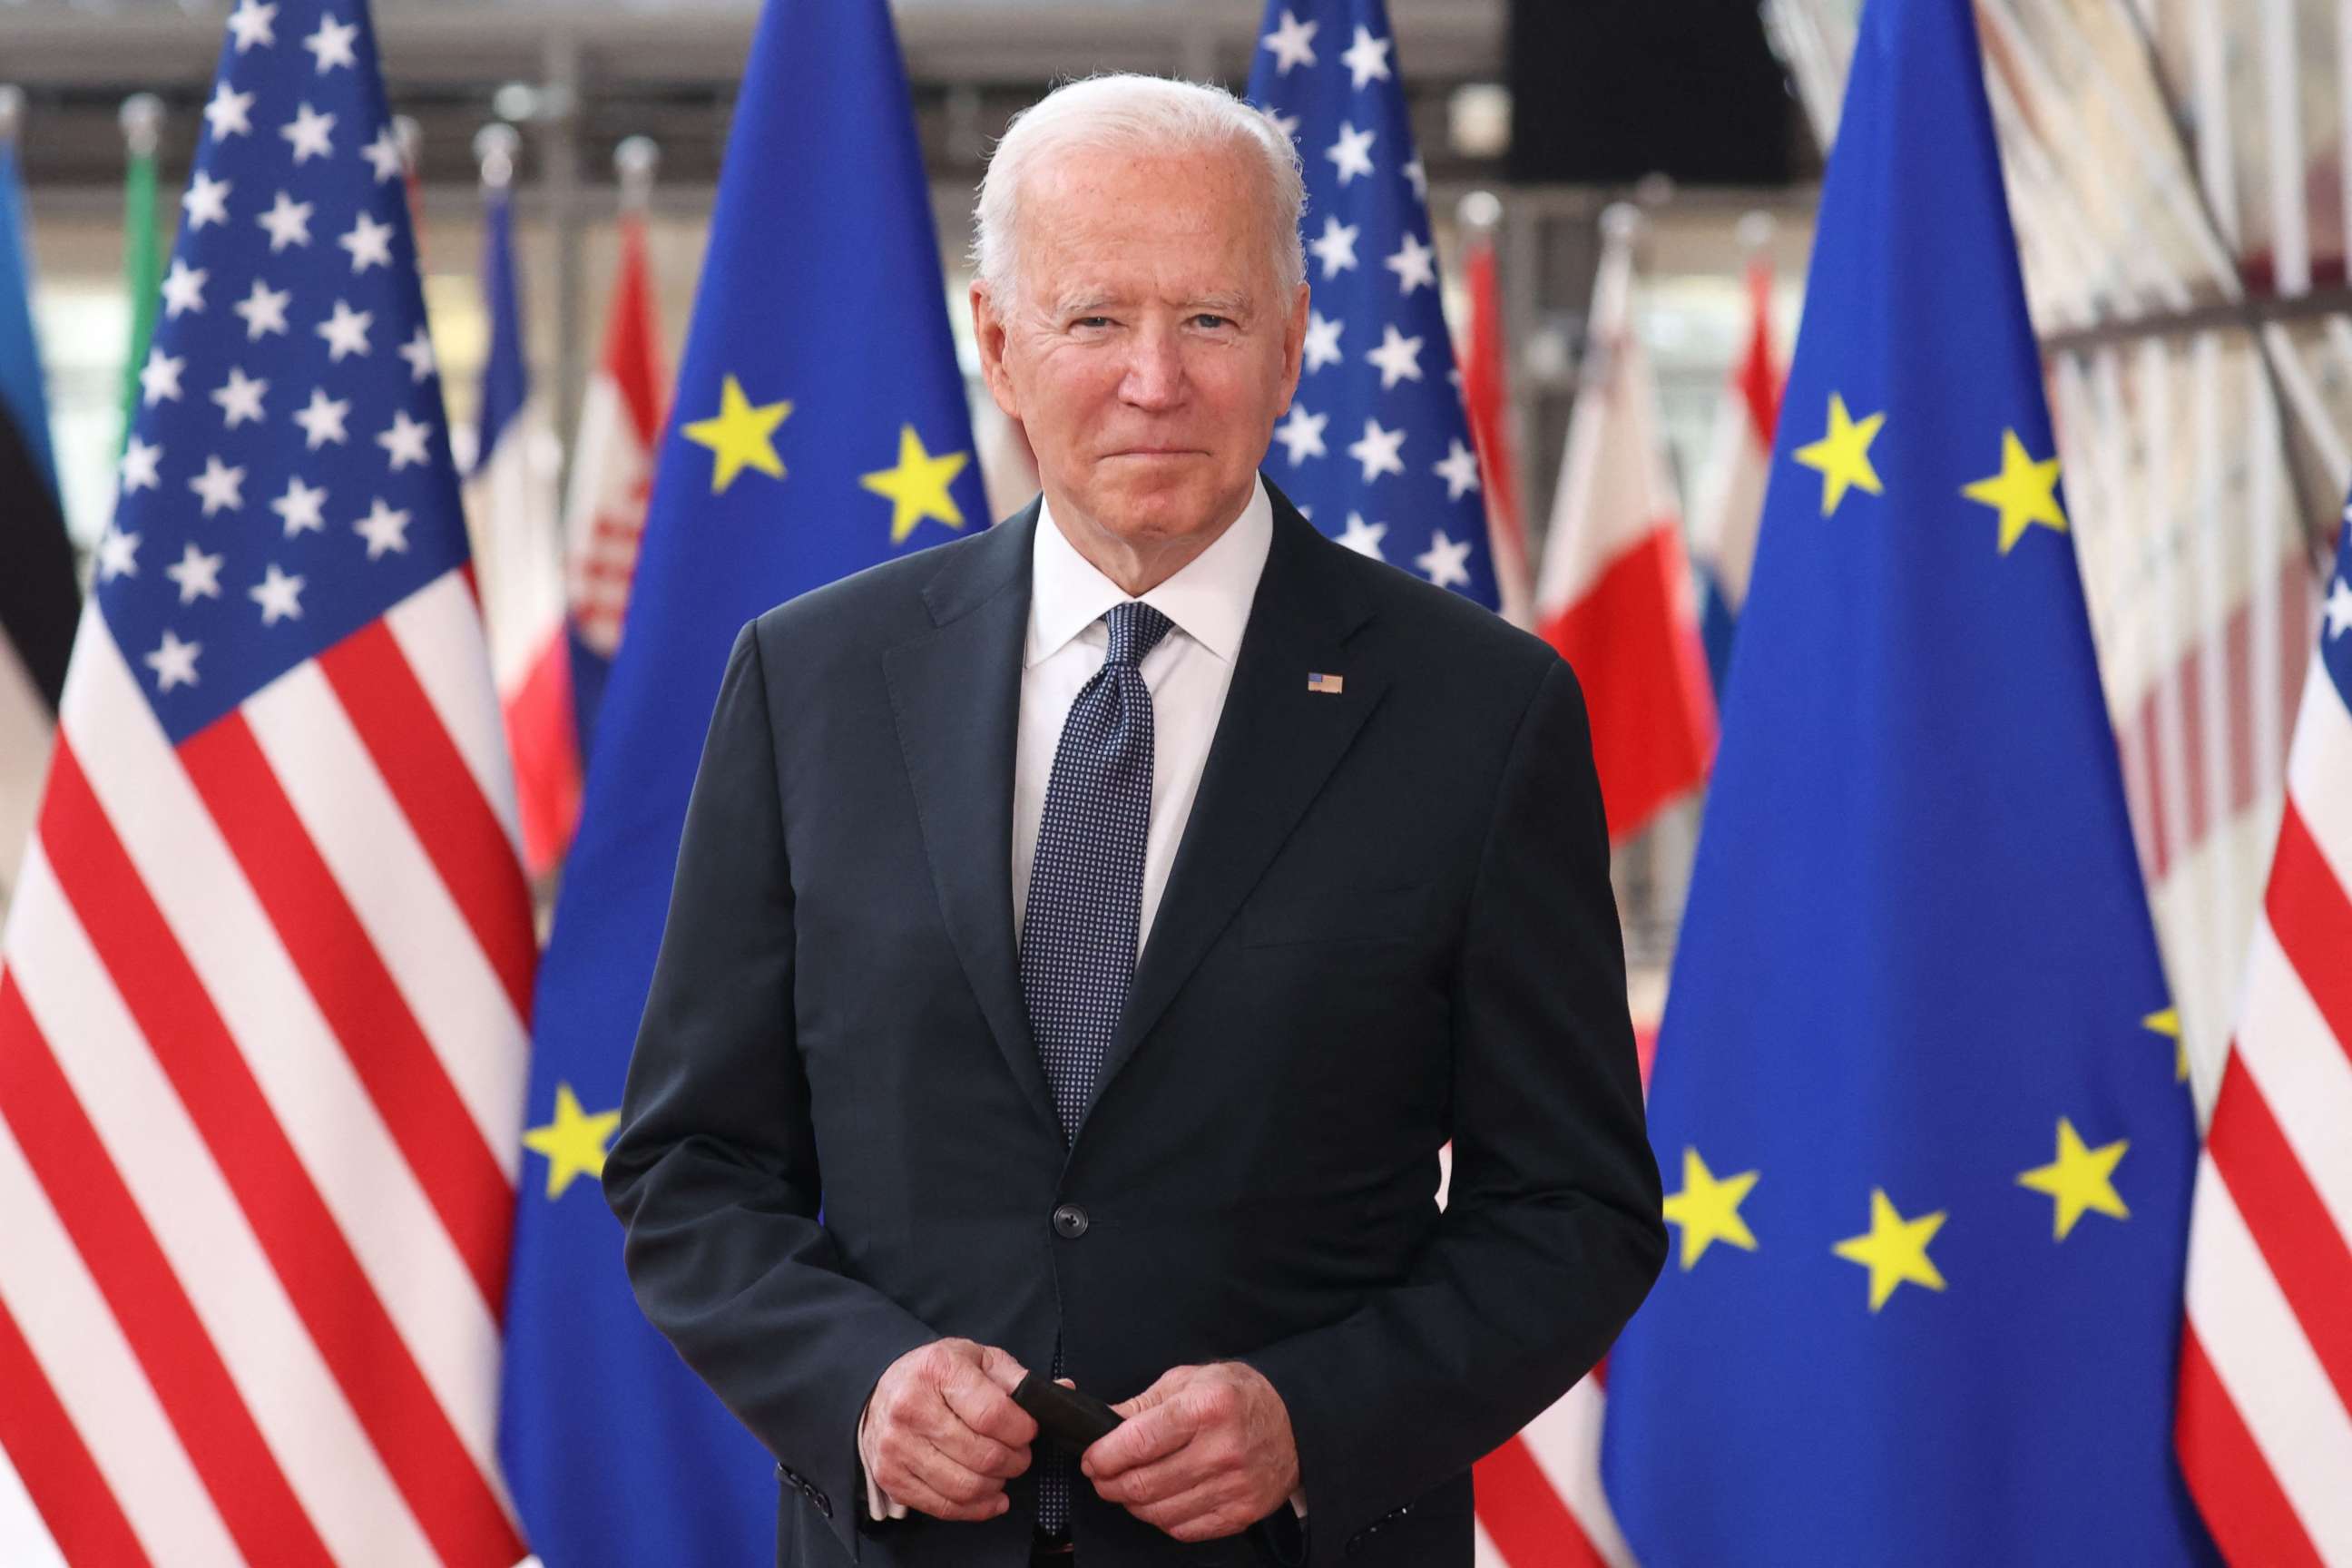 PHOTO: President Joe Biden arrives for an EU-US summit at the European Union headquarters in Brussels on June 15, 2021.